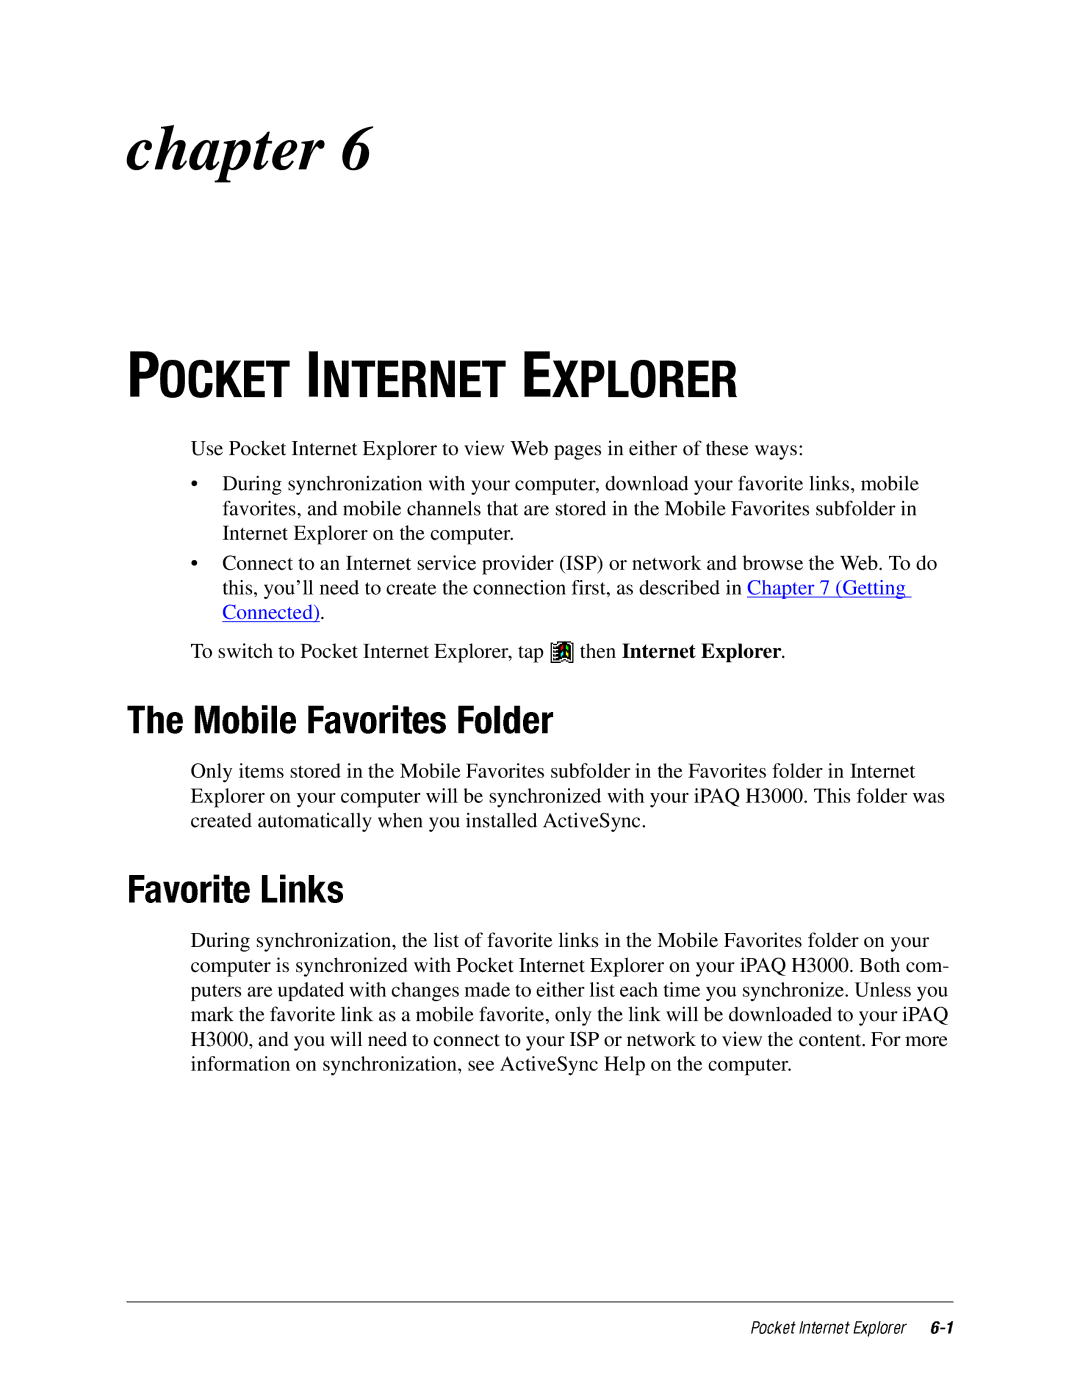 DeWalt IPAQ H3000 manual Pocket IFavoritesNTERNET Explorer 